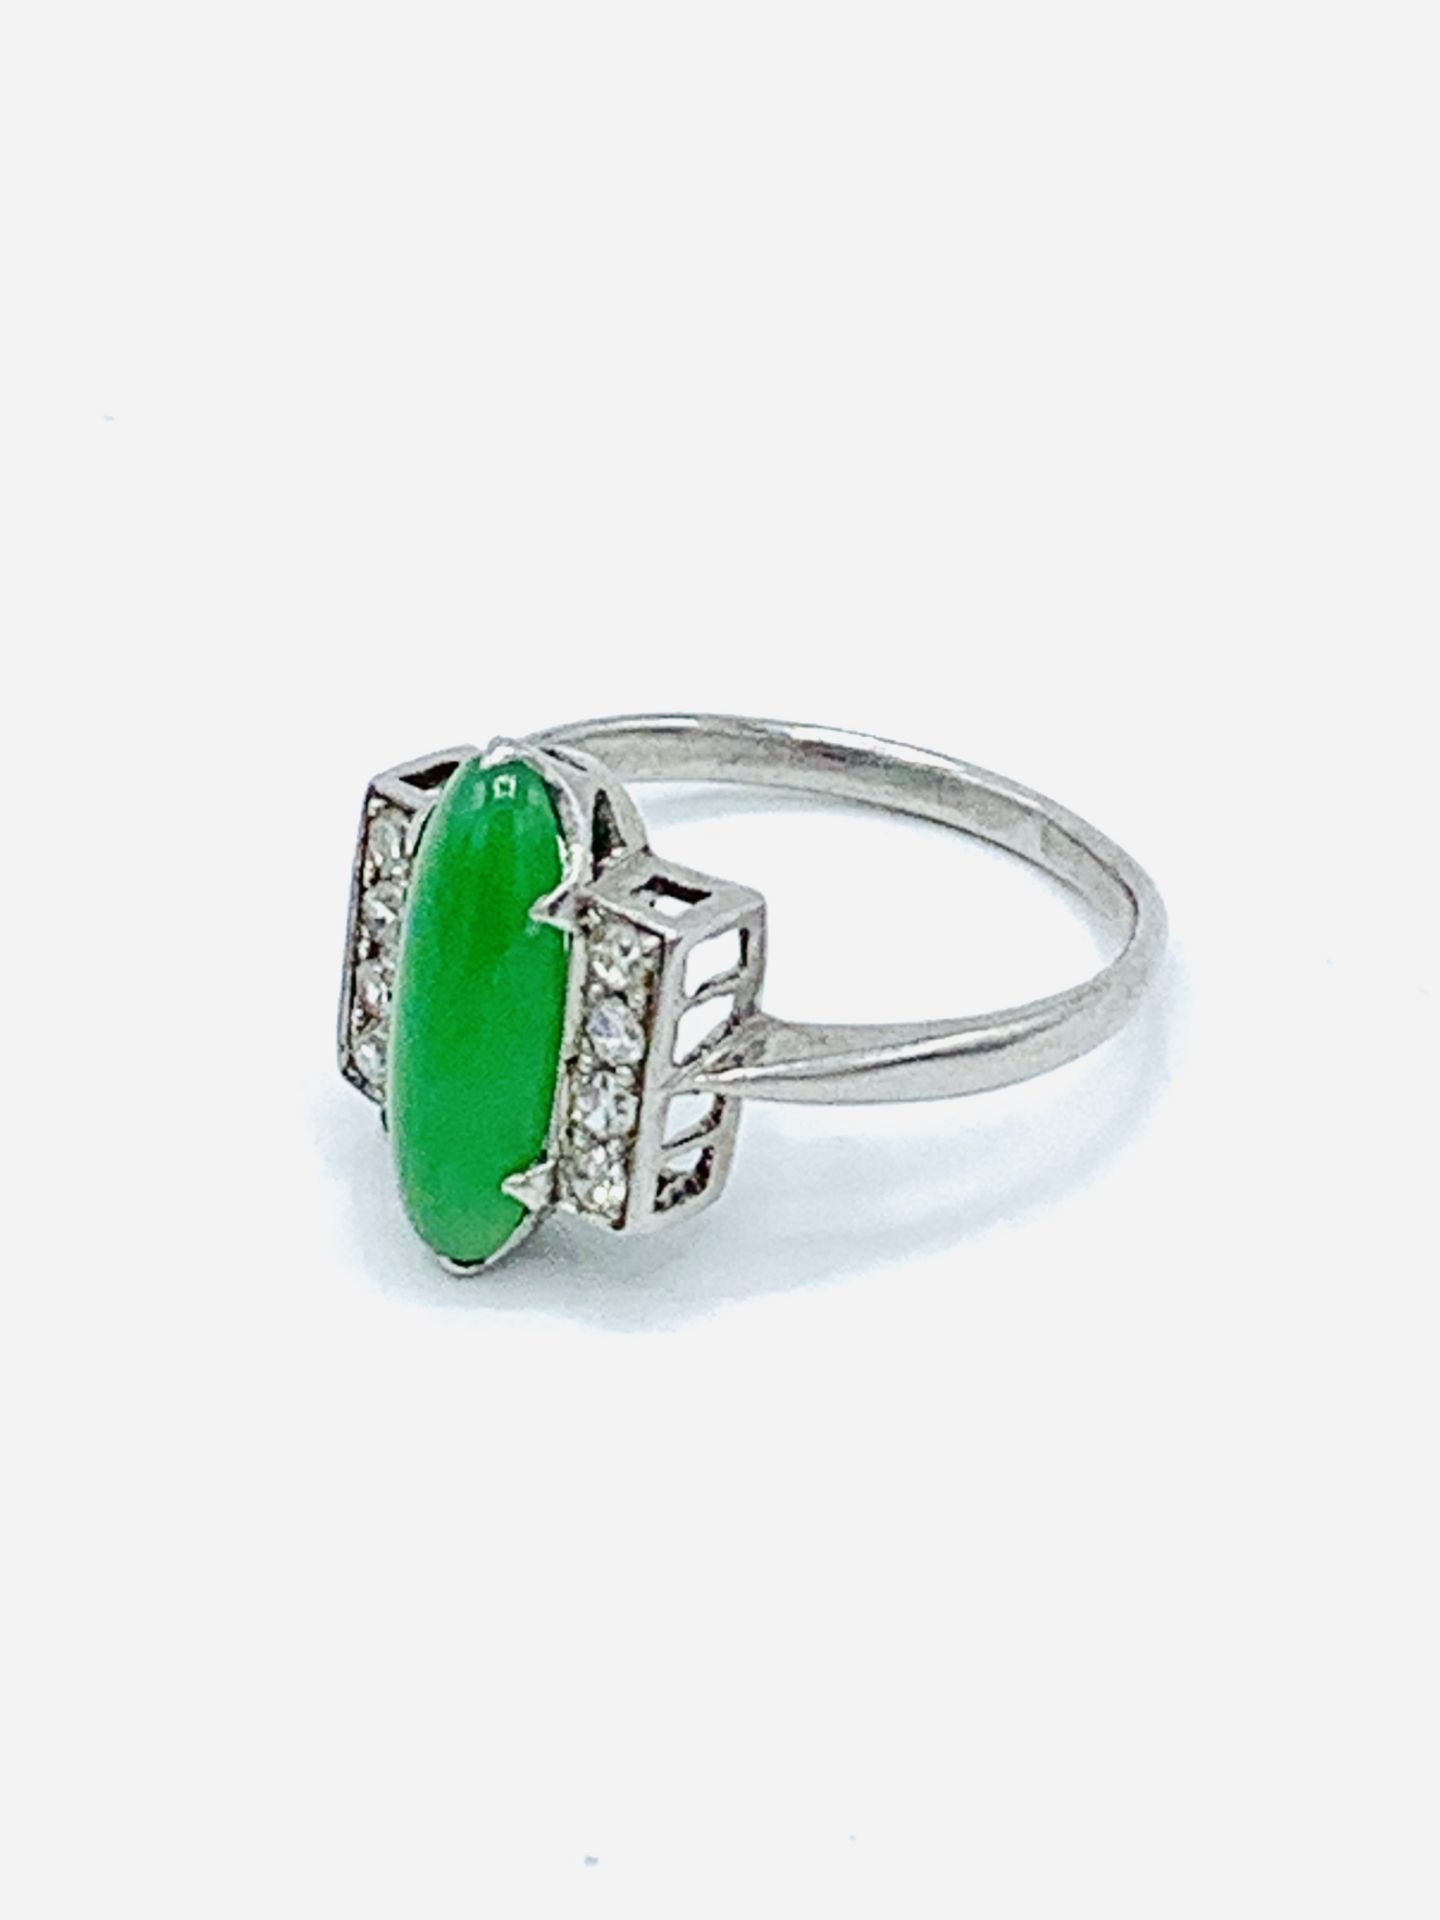 Jade and diamond ring. - Image 3 of 3